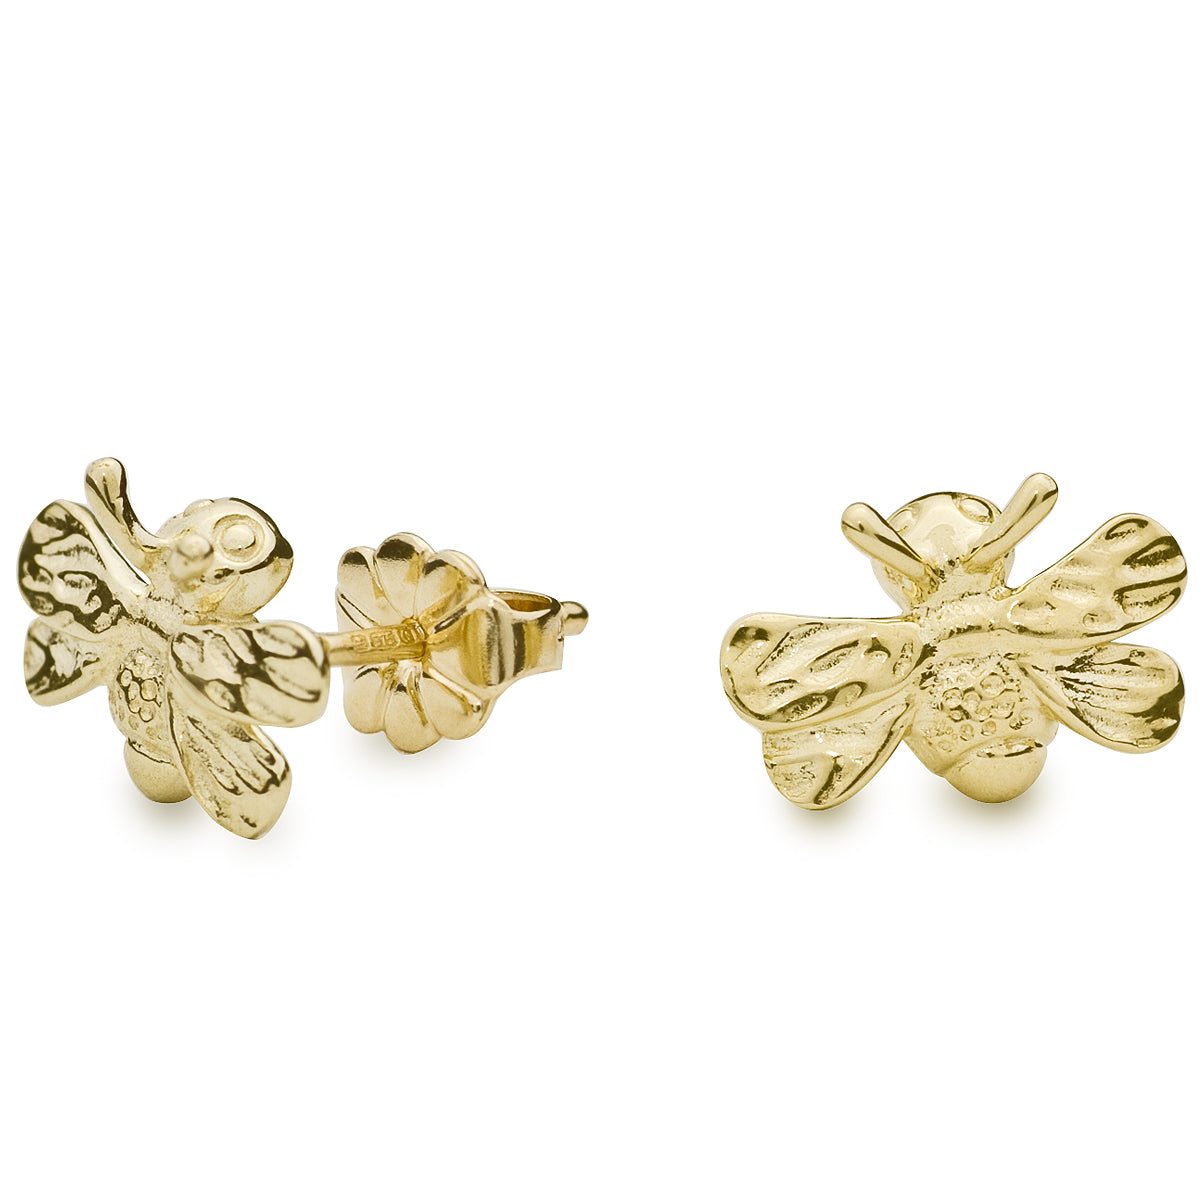 solid gold Bumble Bee stud earrings from award winning designer Scarlett Jewellery